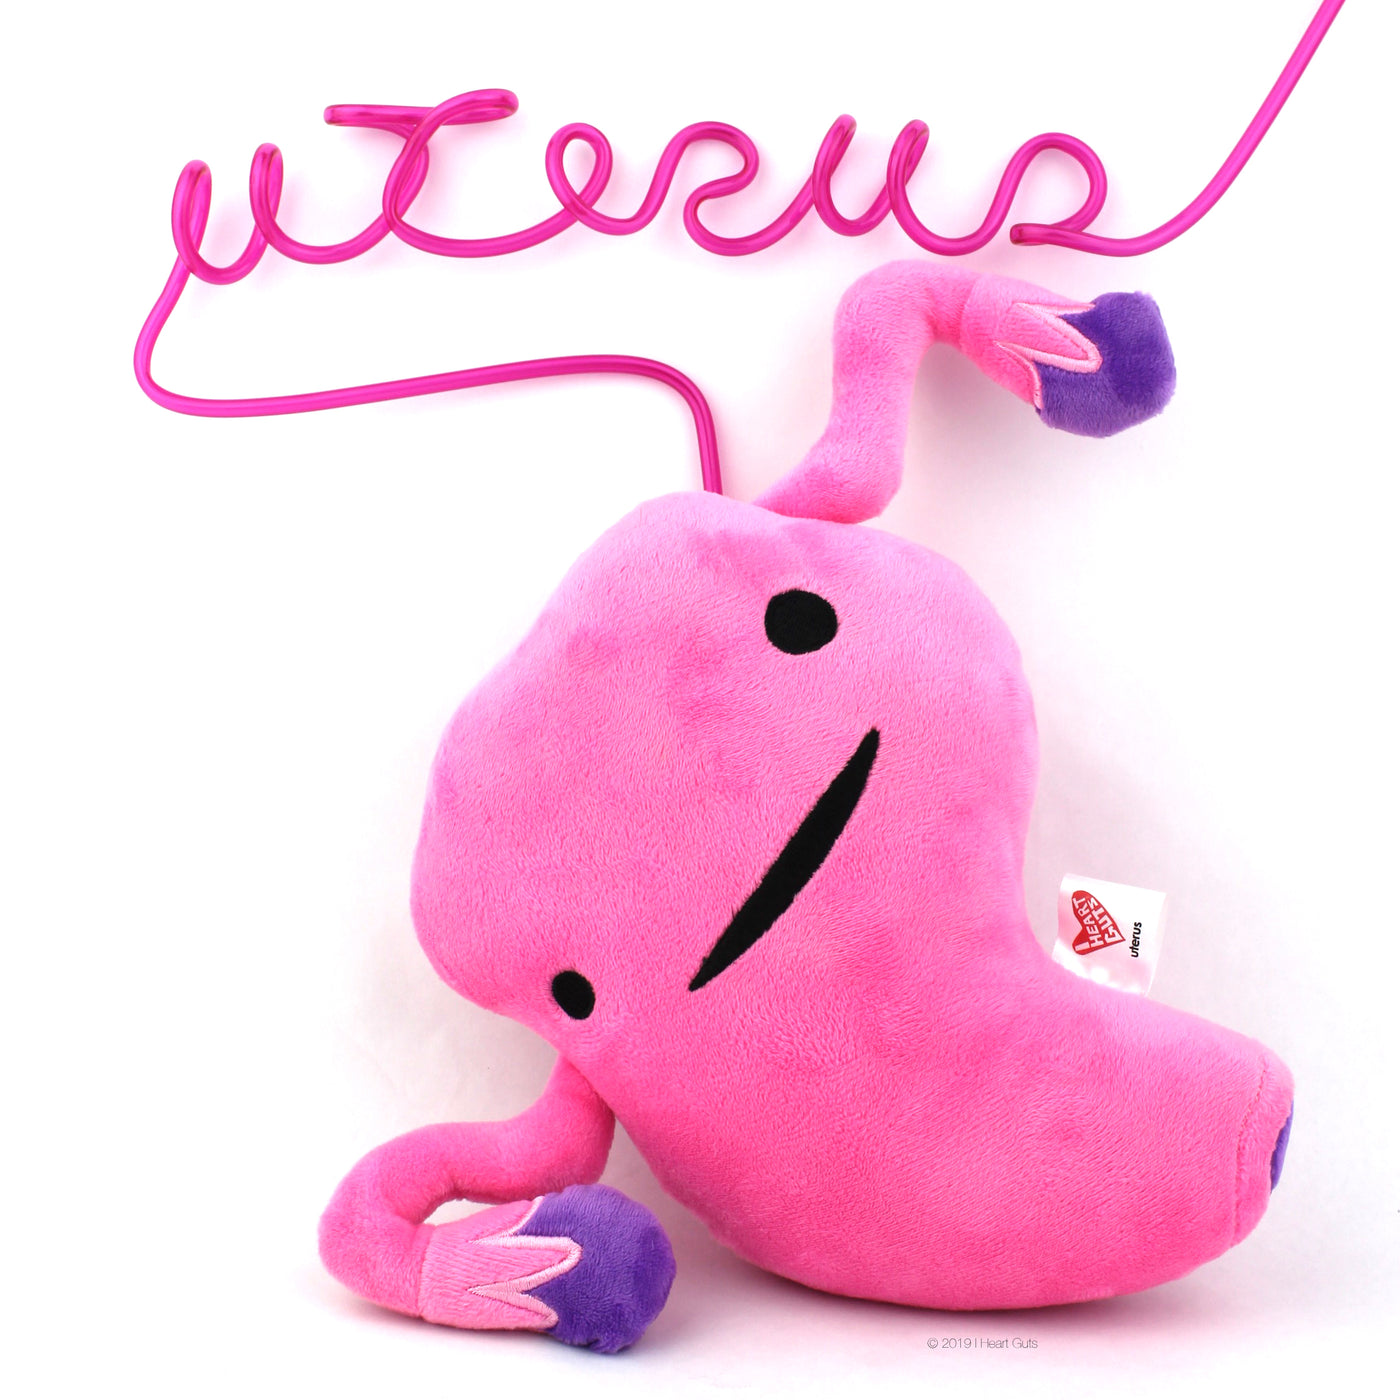 Uterus Plush - Womb Service! - Plush Organ Stuffed Toy Pillow - I Heart Guts